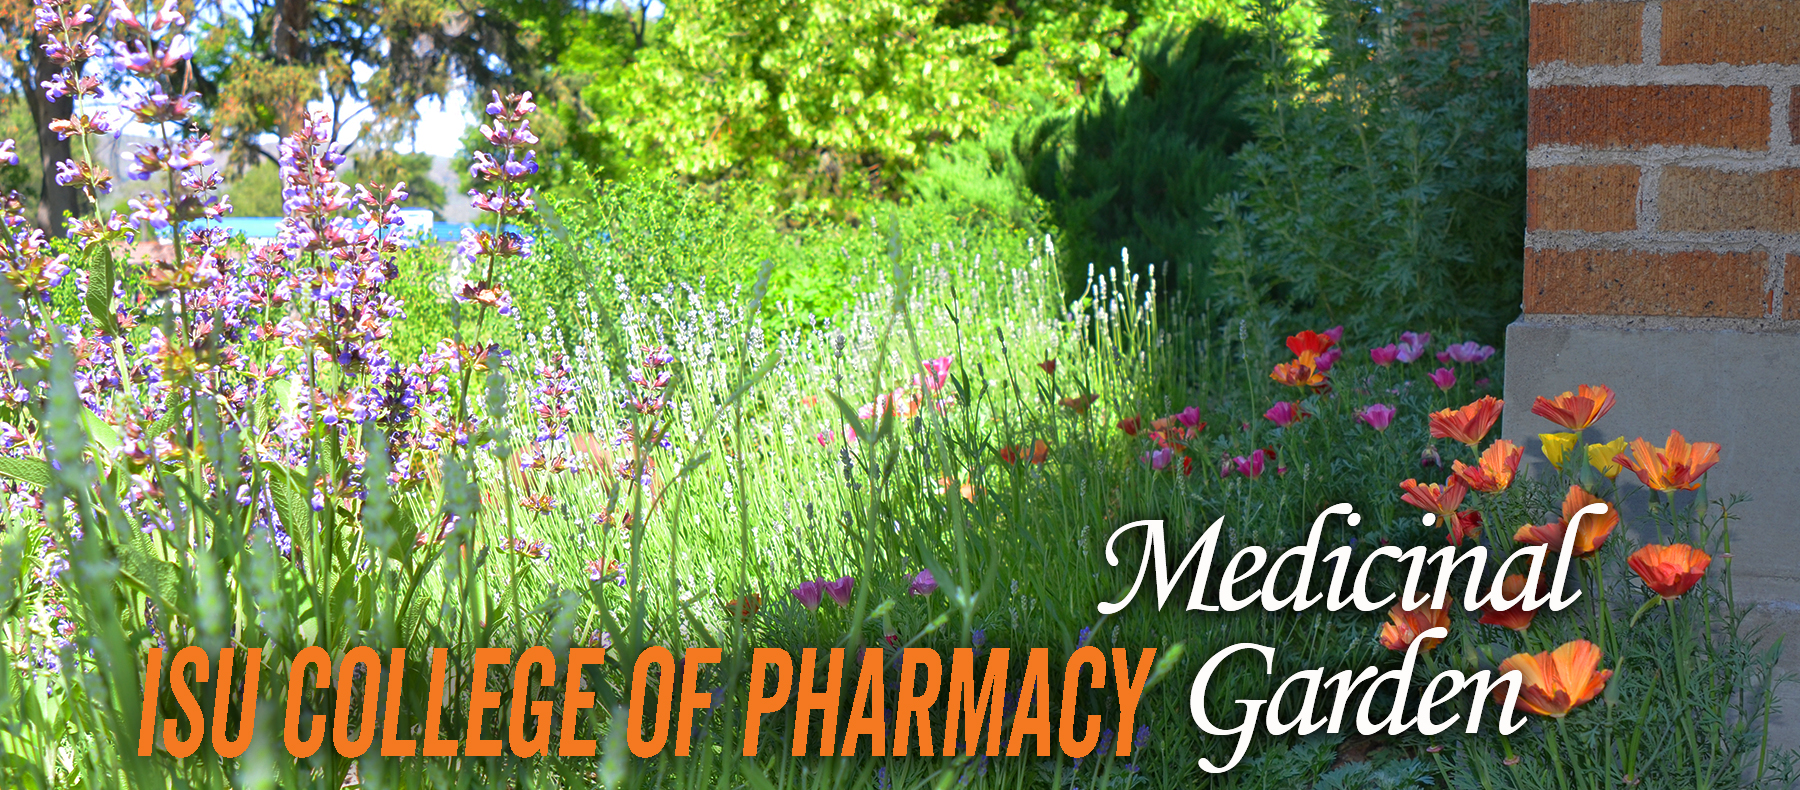 ISU College of Pharmacy Medicinal Garden